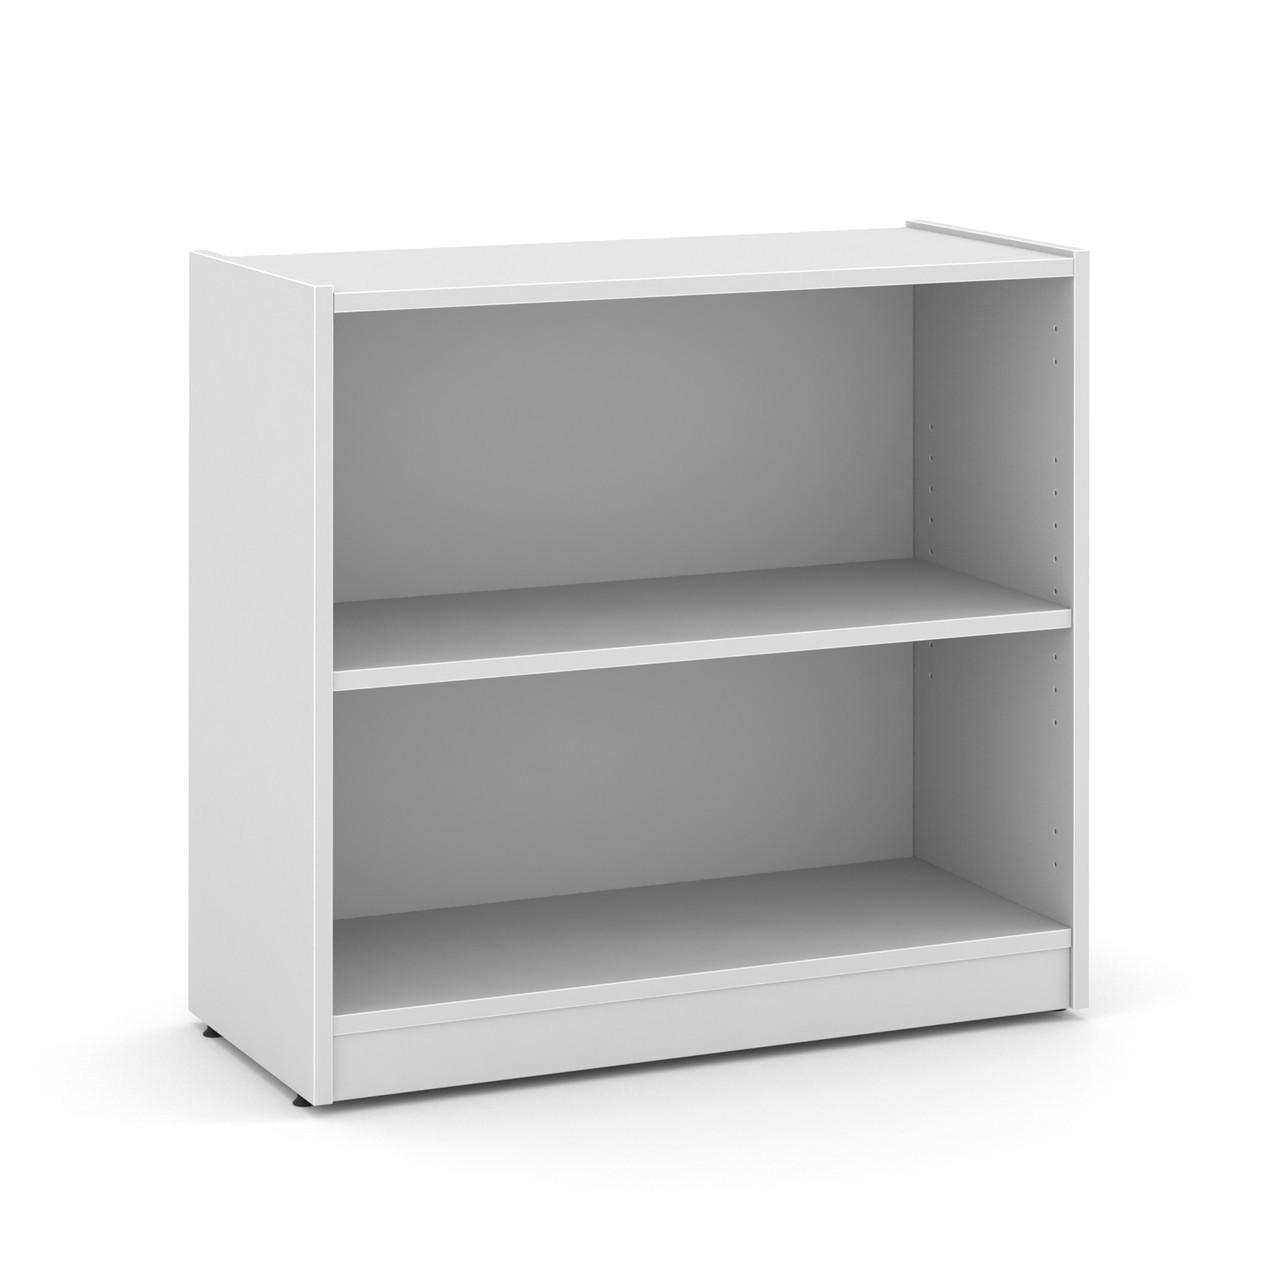  Office Source OS Laminate 2 Shelf Bookcase PL154 